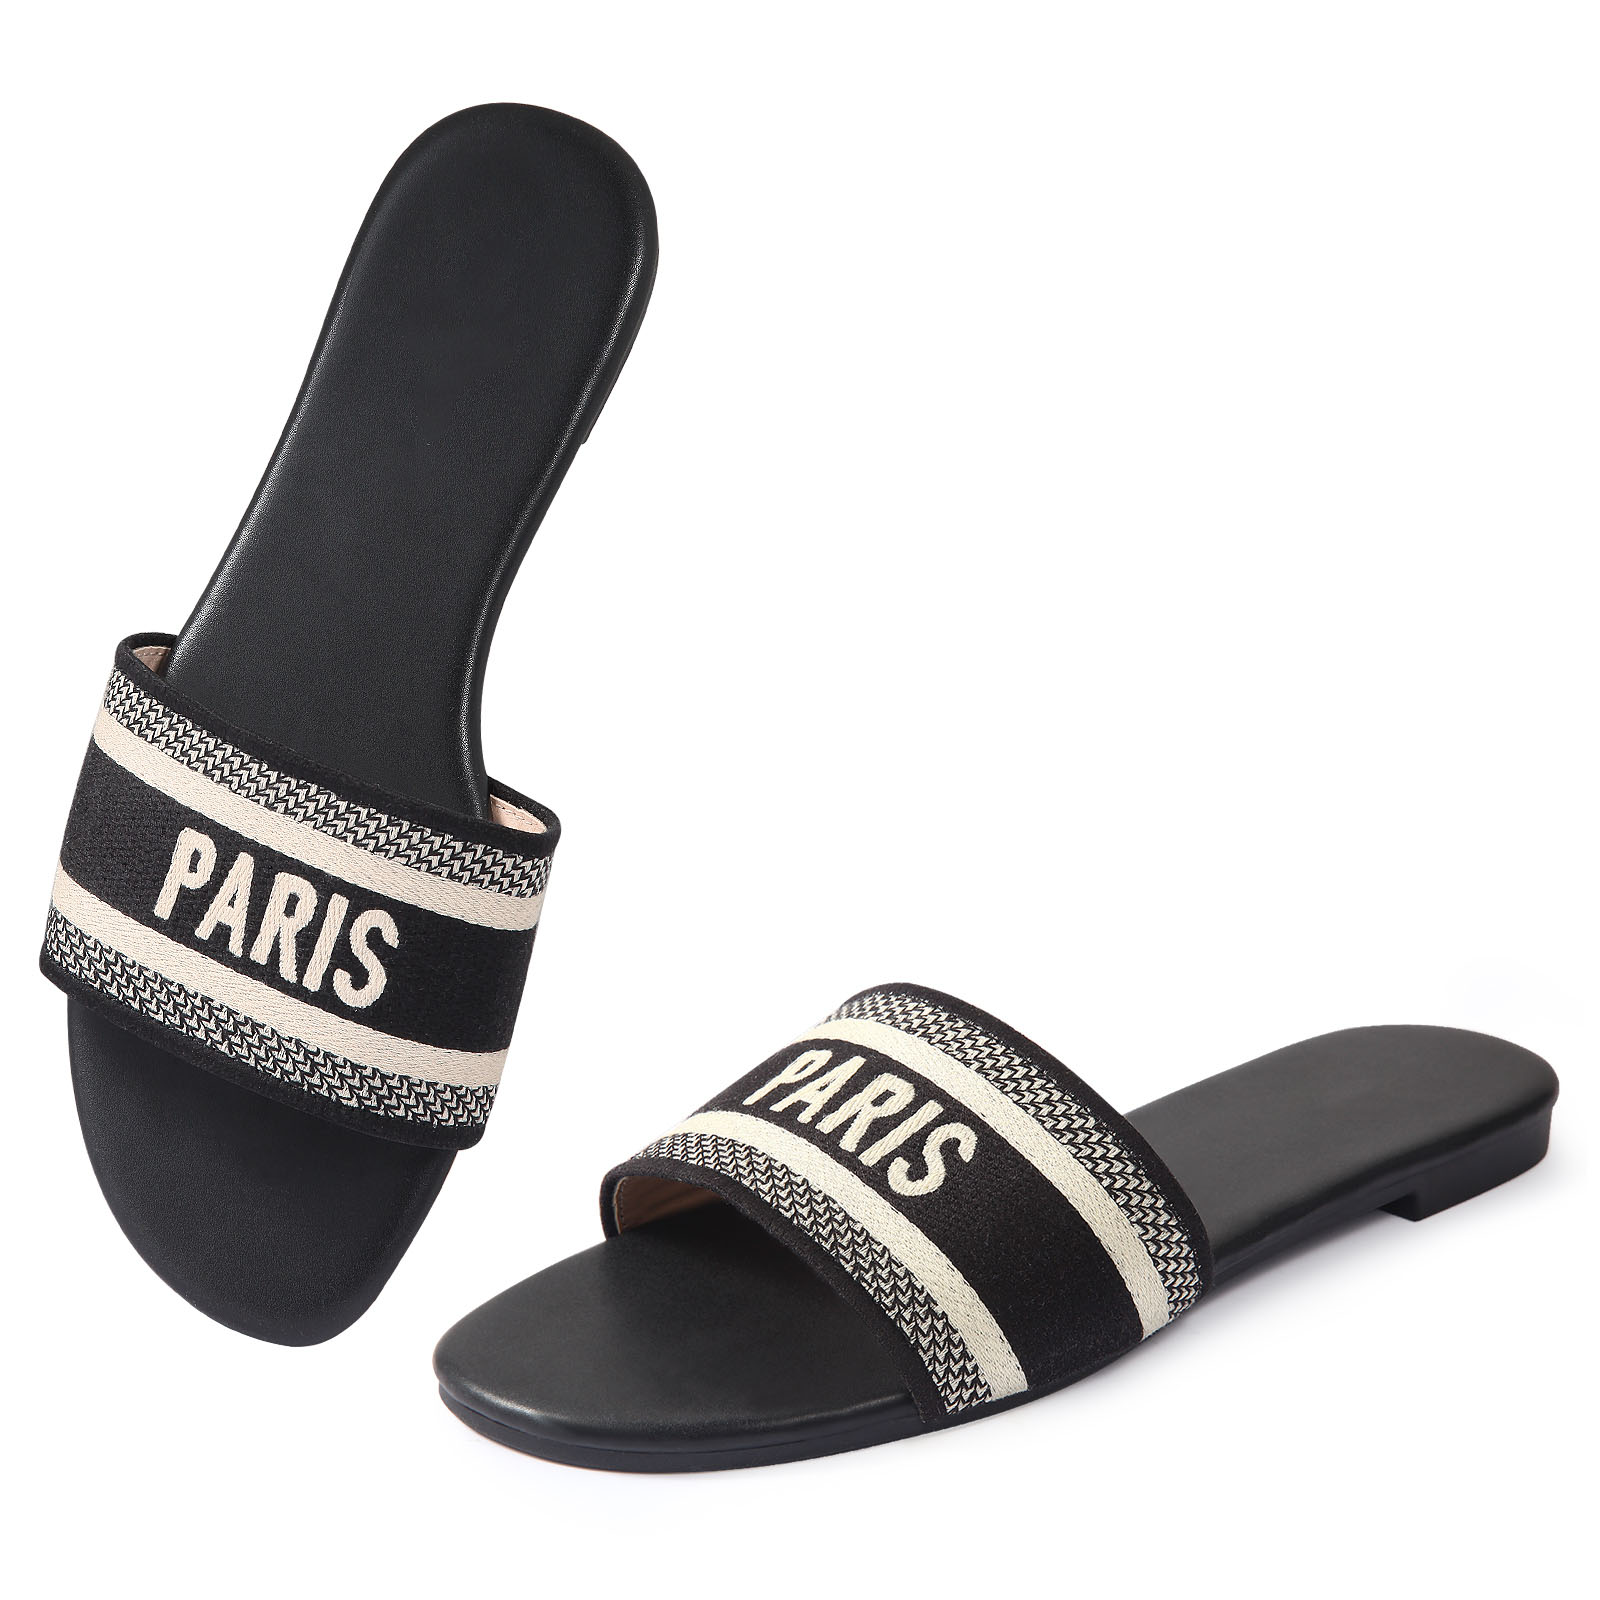 Women's Flat Sandals Casual Beach Sandals Slippers for Summer